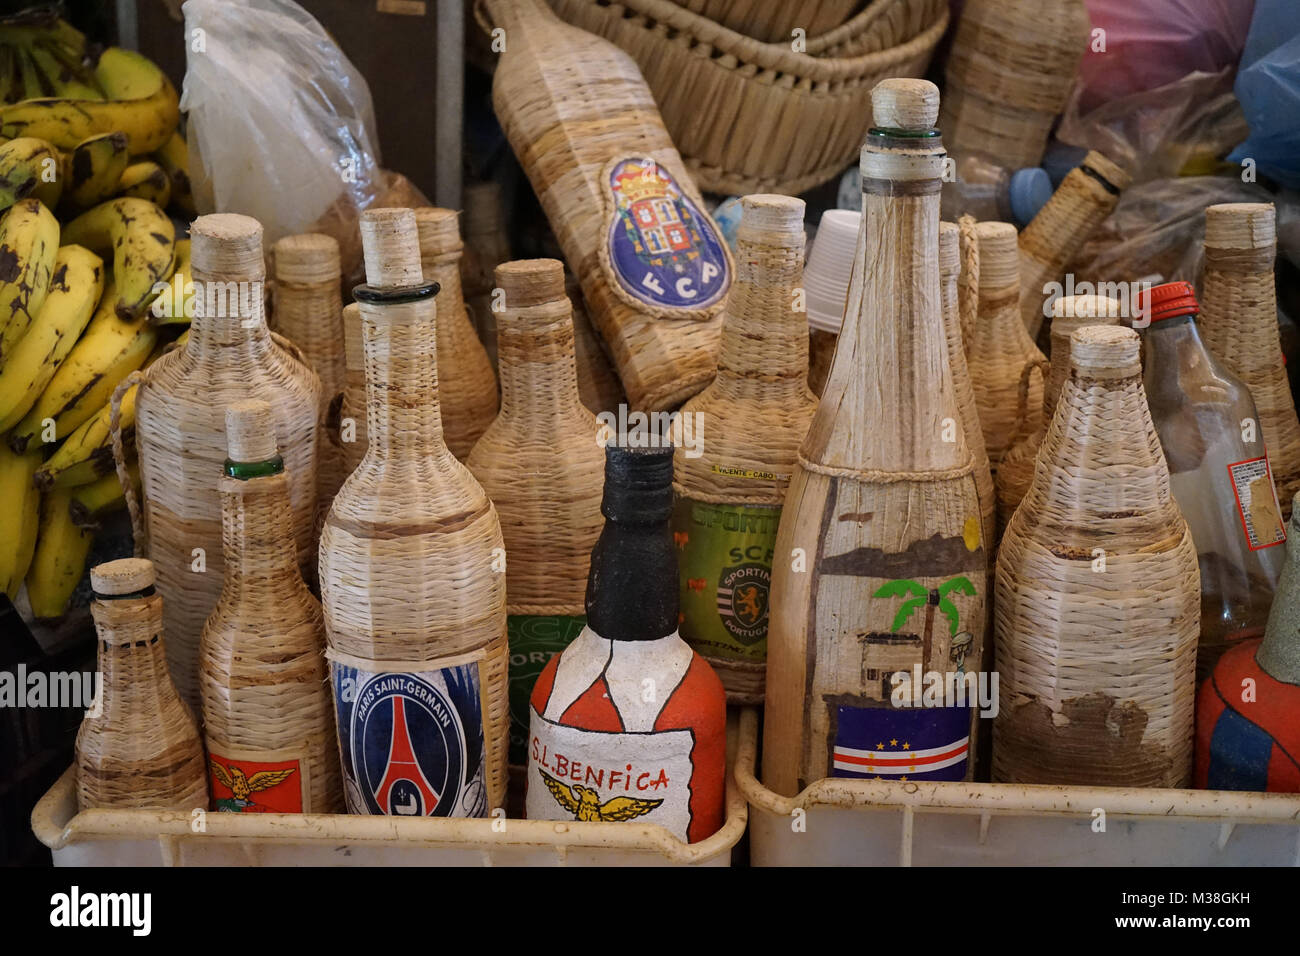 Bottiglie di Rum wirth fatte di zucchero di canna, Mindelo, Capo Verde Foto  stock - Alamy